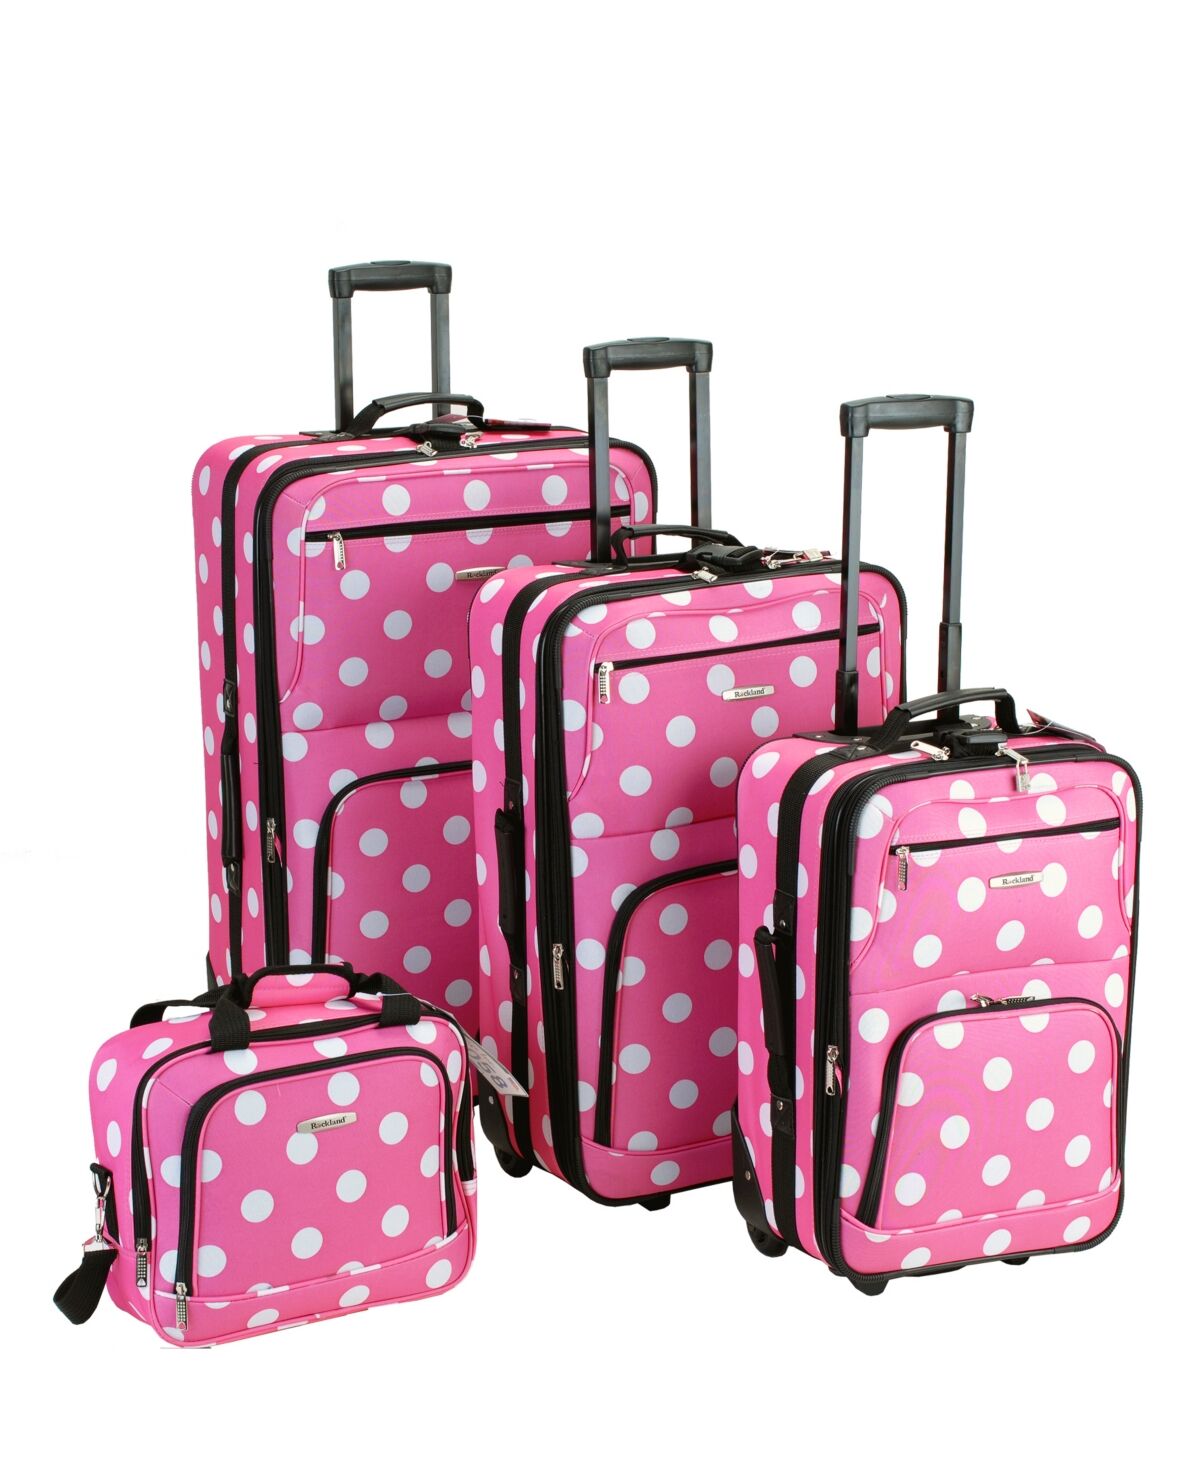 Rockland 4-Pc. Softside Luggage Set - White Dots on Pink